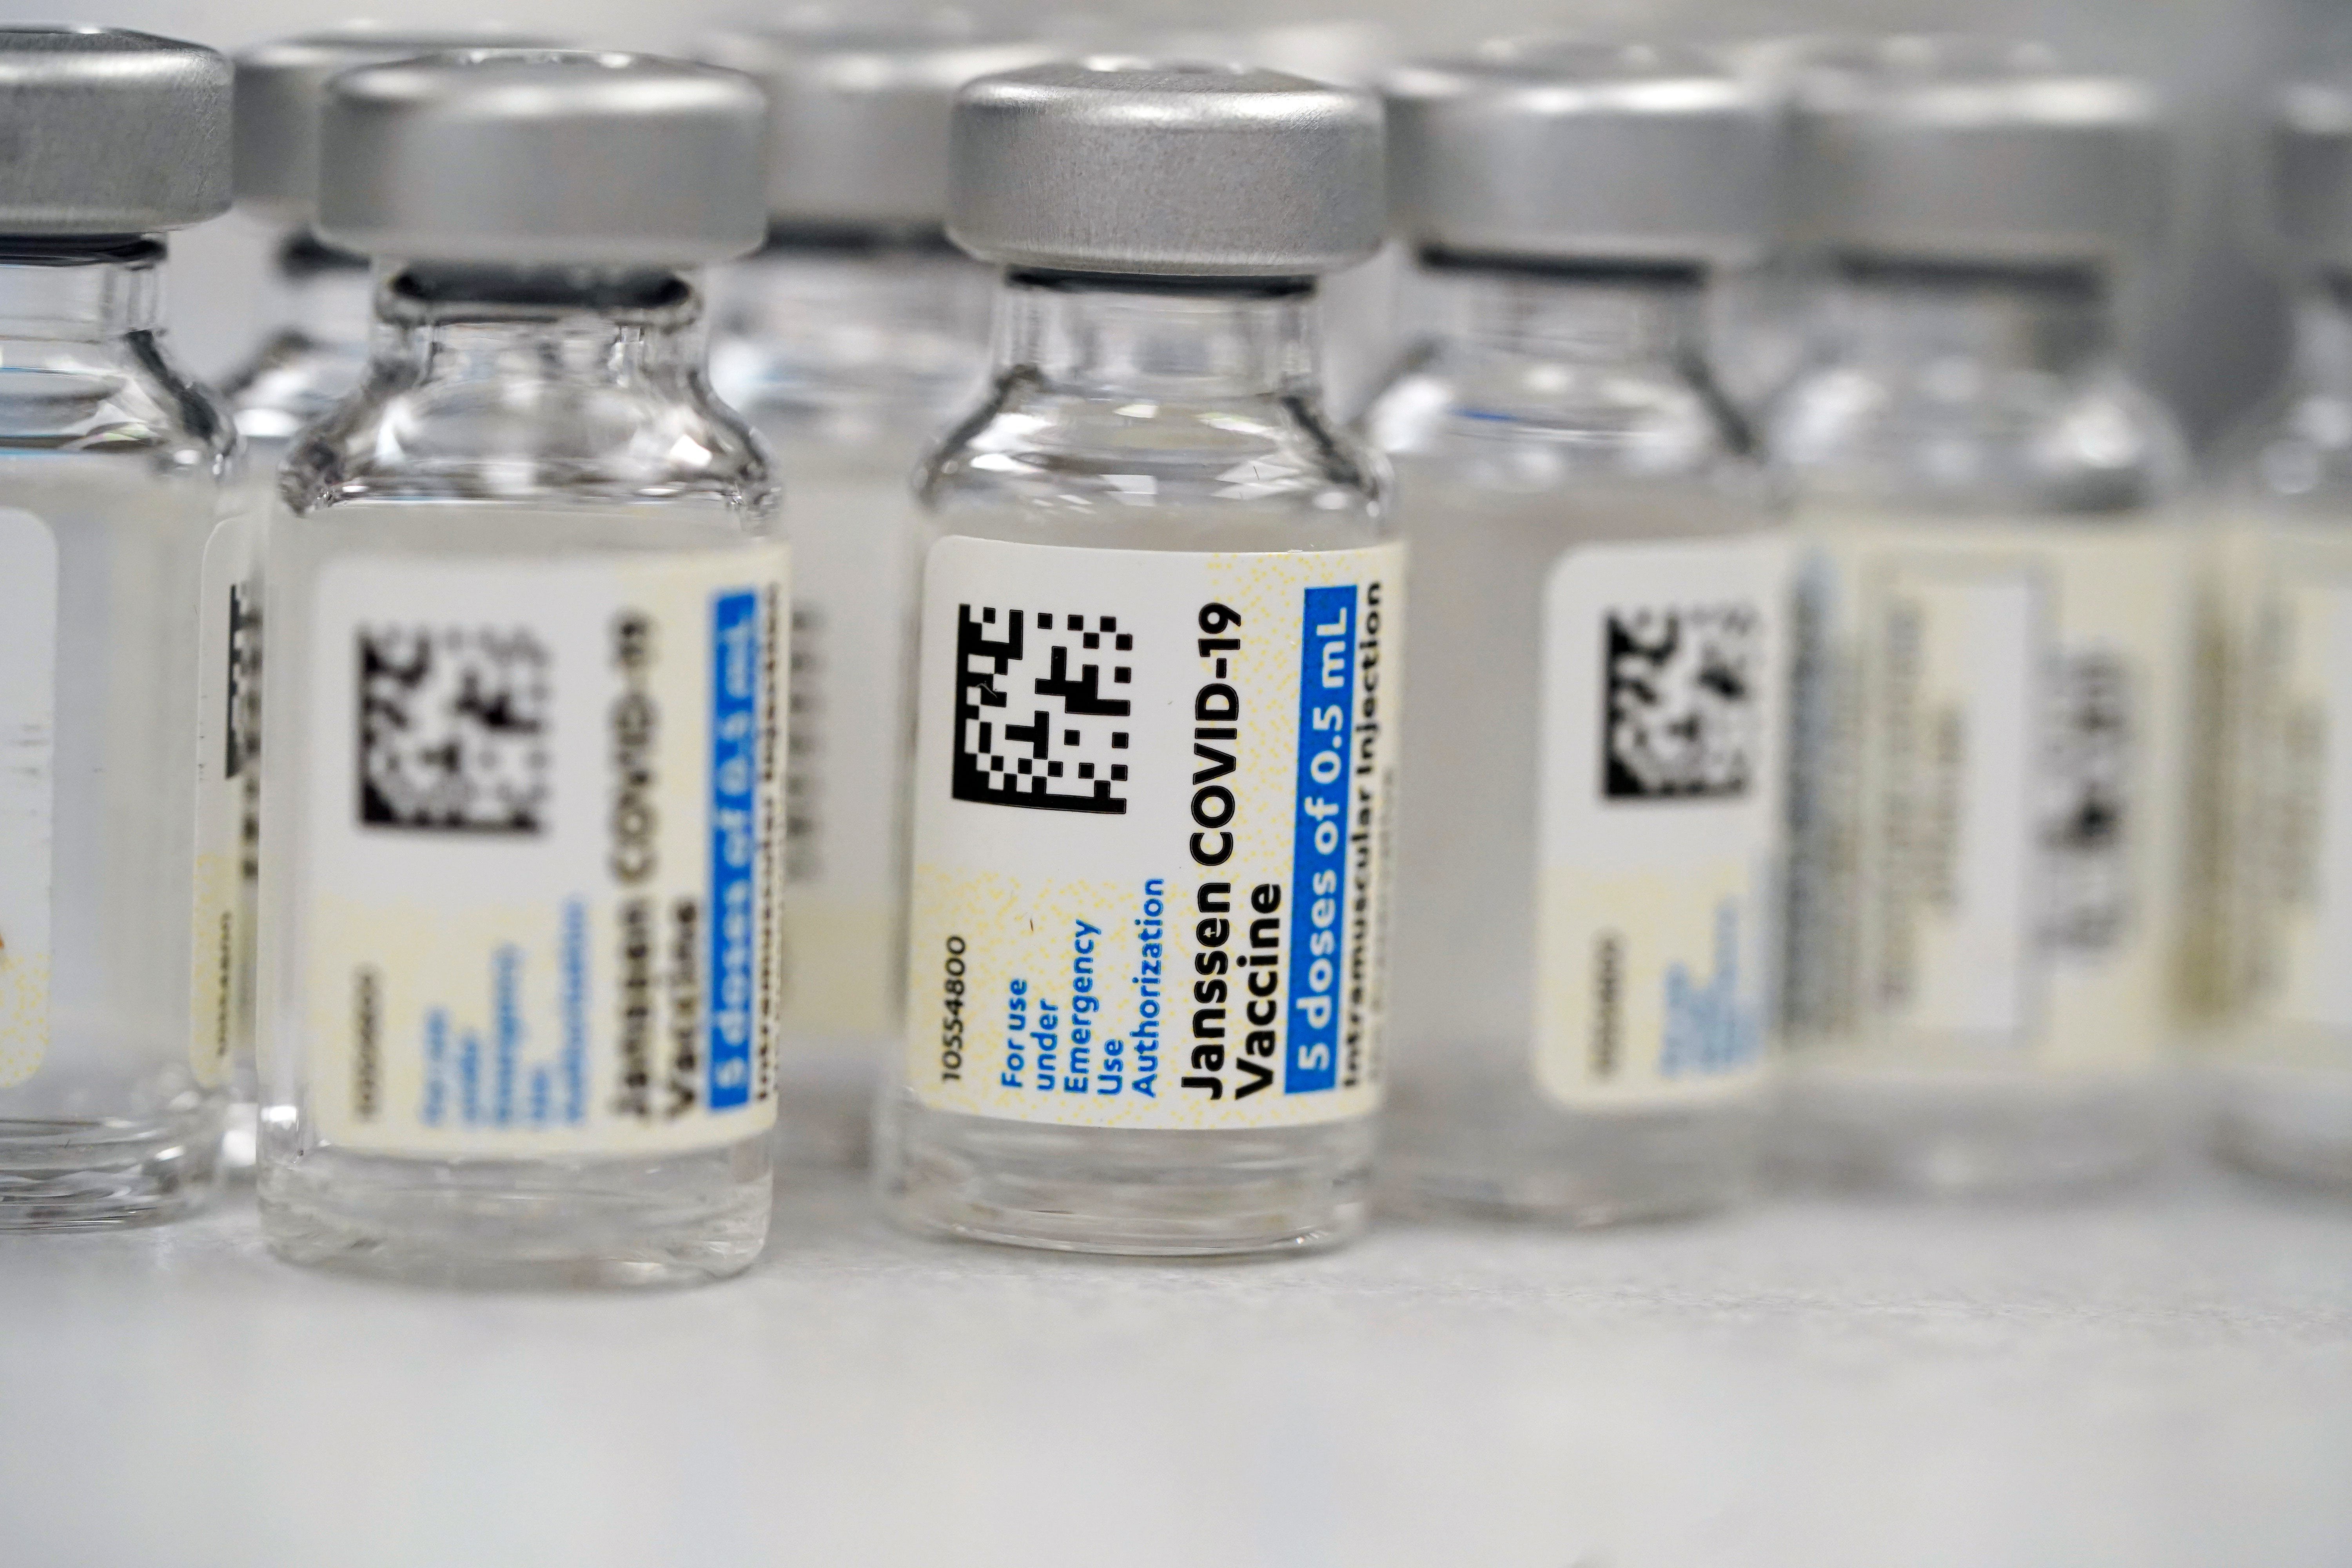 Oregon: CDC investigating woman's death after J&J vaccine 1